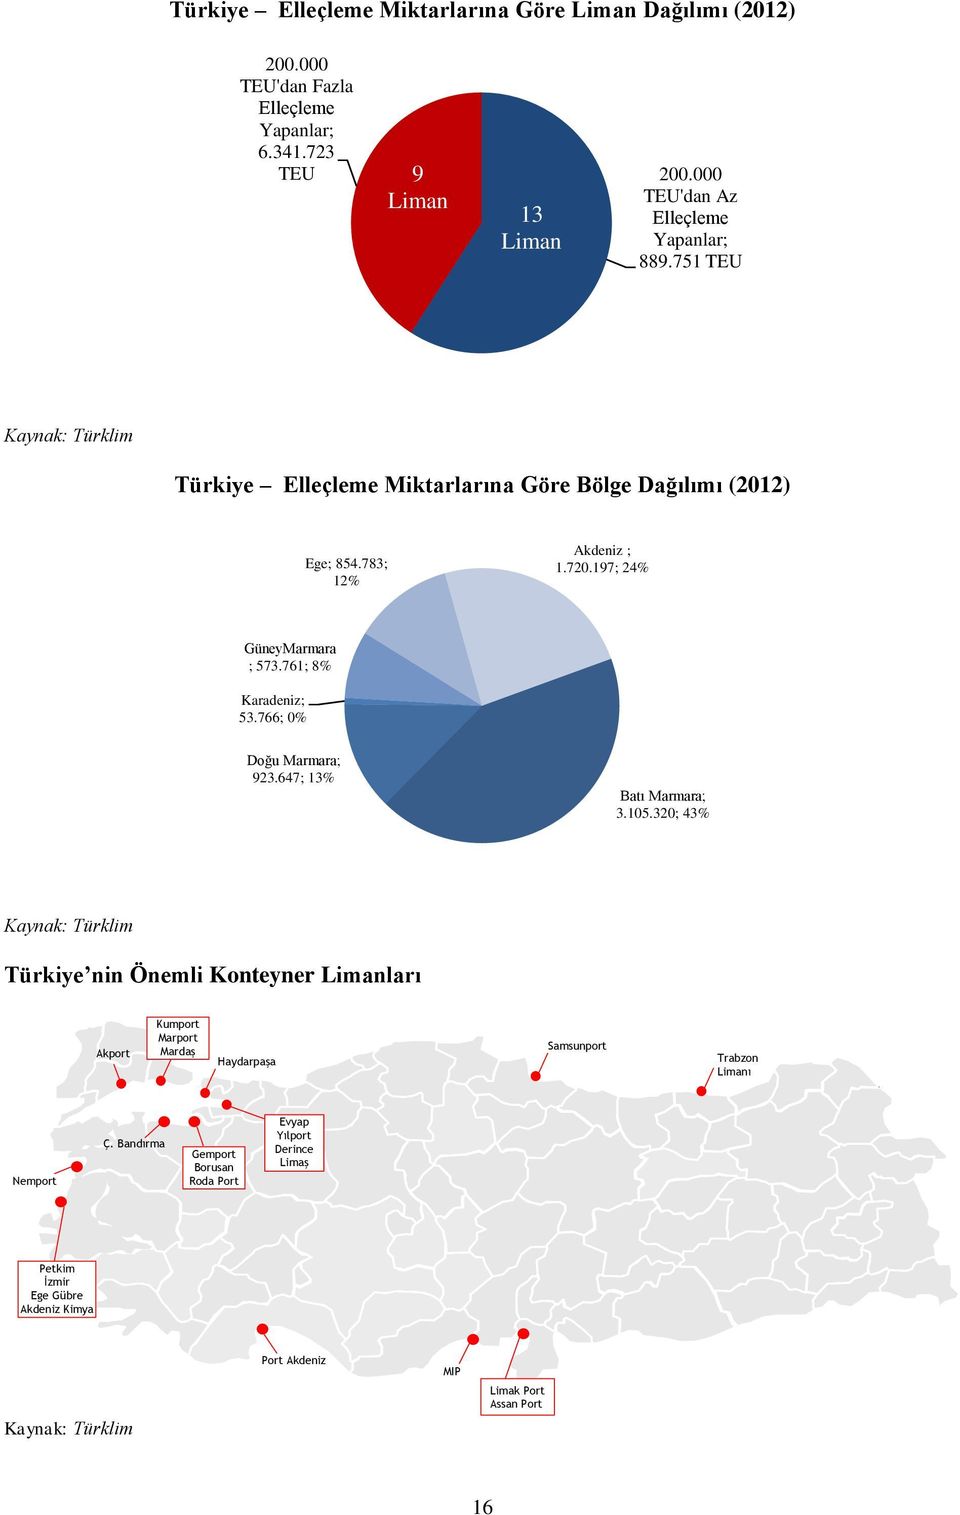 766; 0% Doğu Marmara; 923.647; 13% Batı Marmara; 3.105.